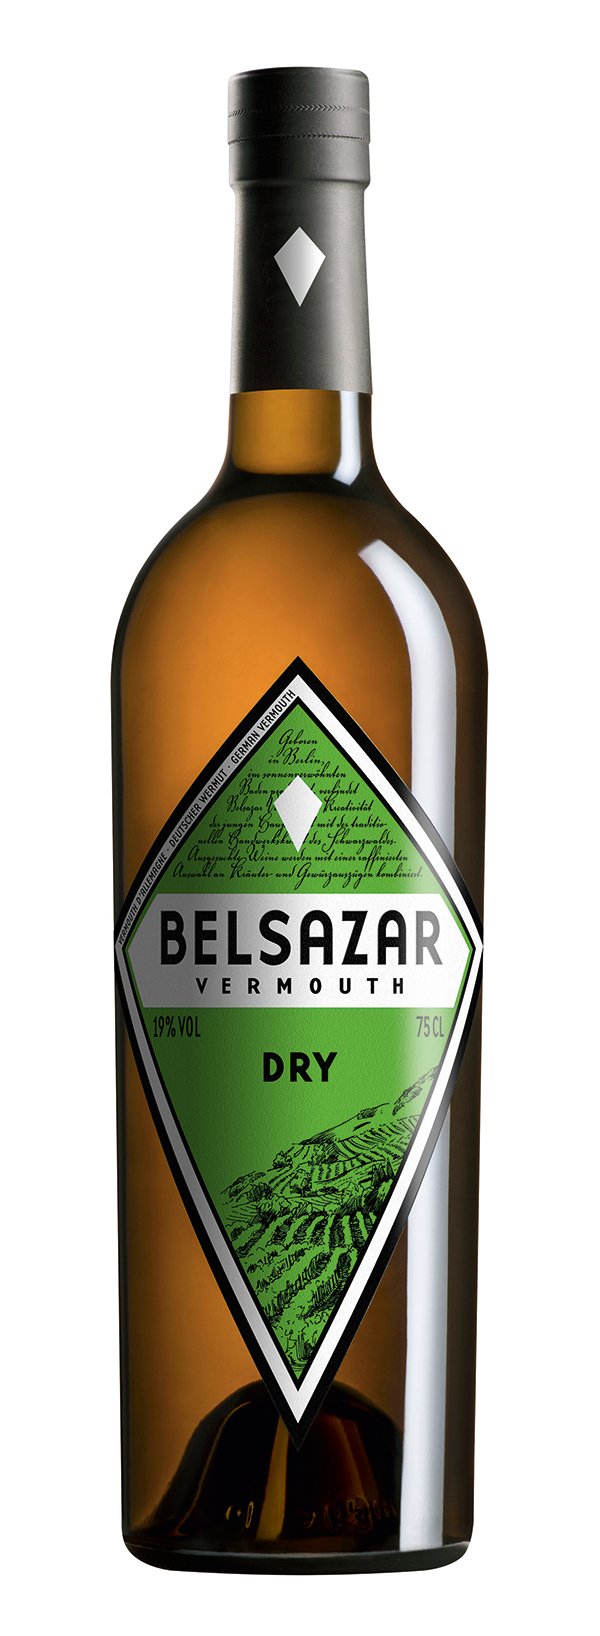 Belsazar Dry Vemouth 19% 0,75L